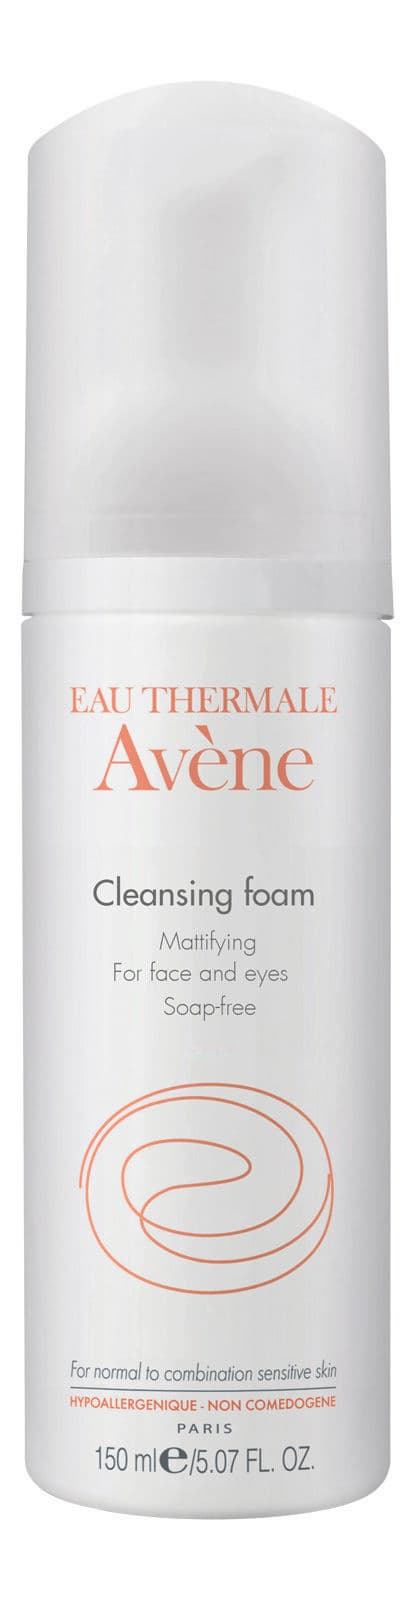 Avene Cleansing Foam 150 mL _5_29 fl_ oz___Facial Cleanser_